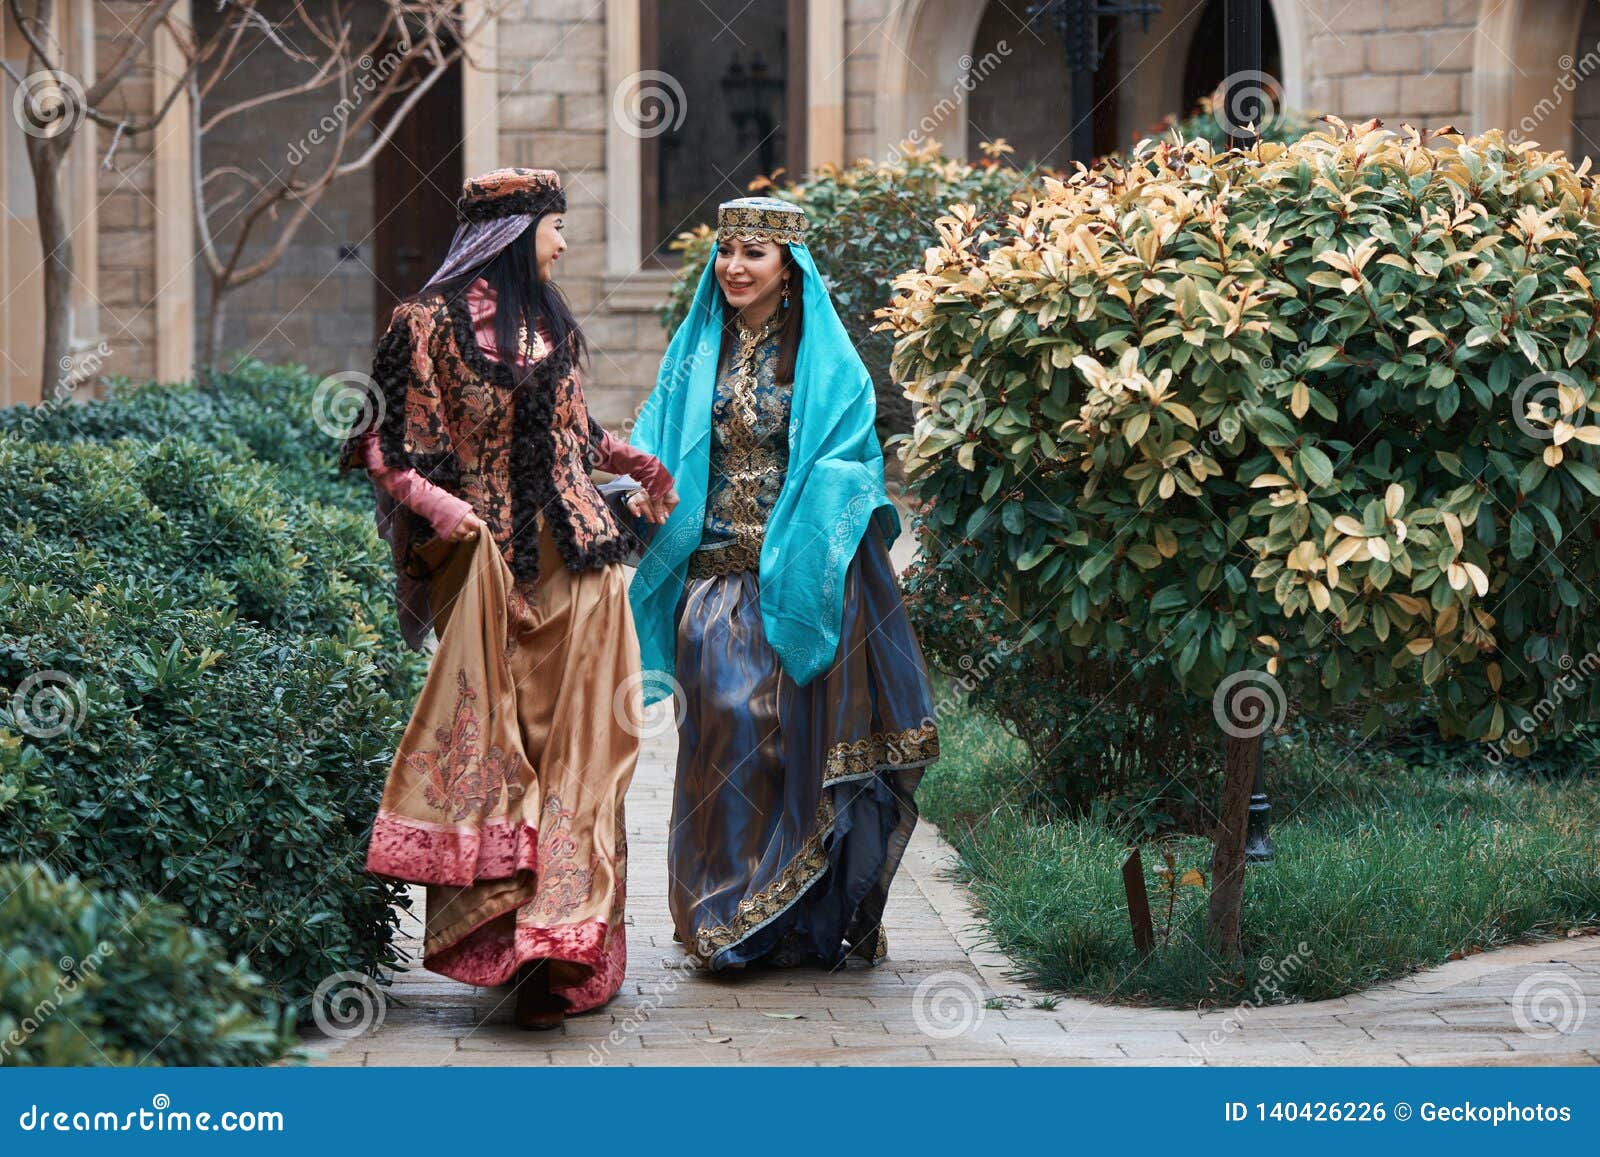 beautiful azeri women in traditional azerbaijani dress running by the wooden door